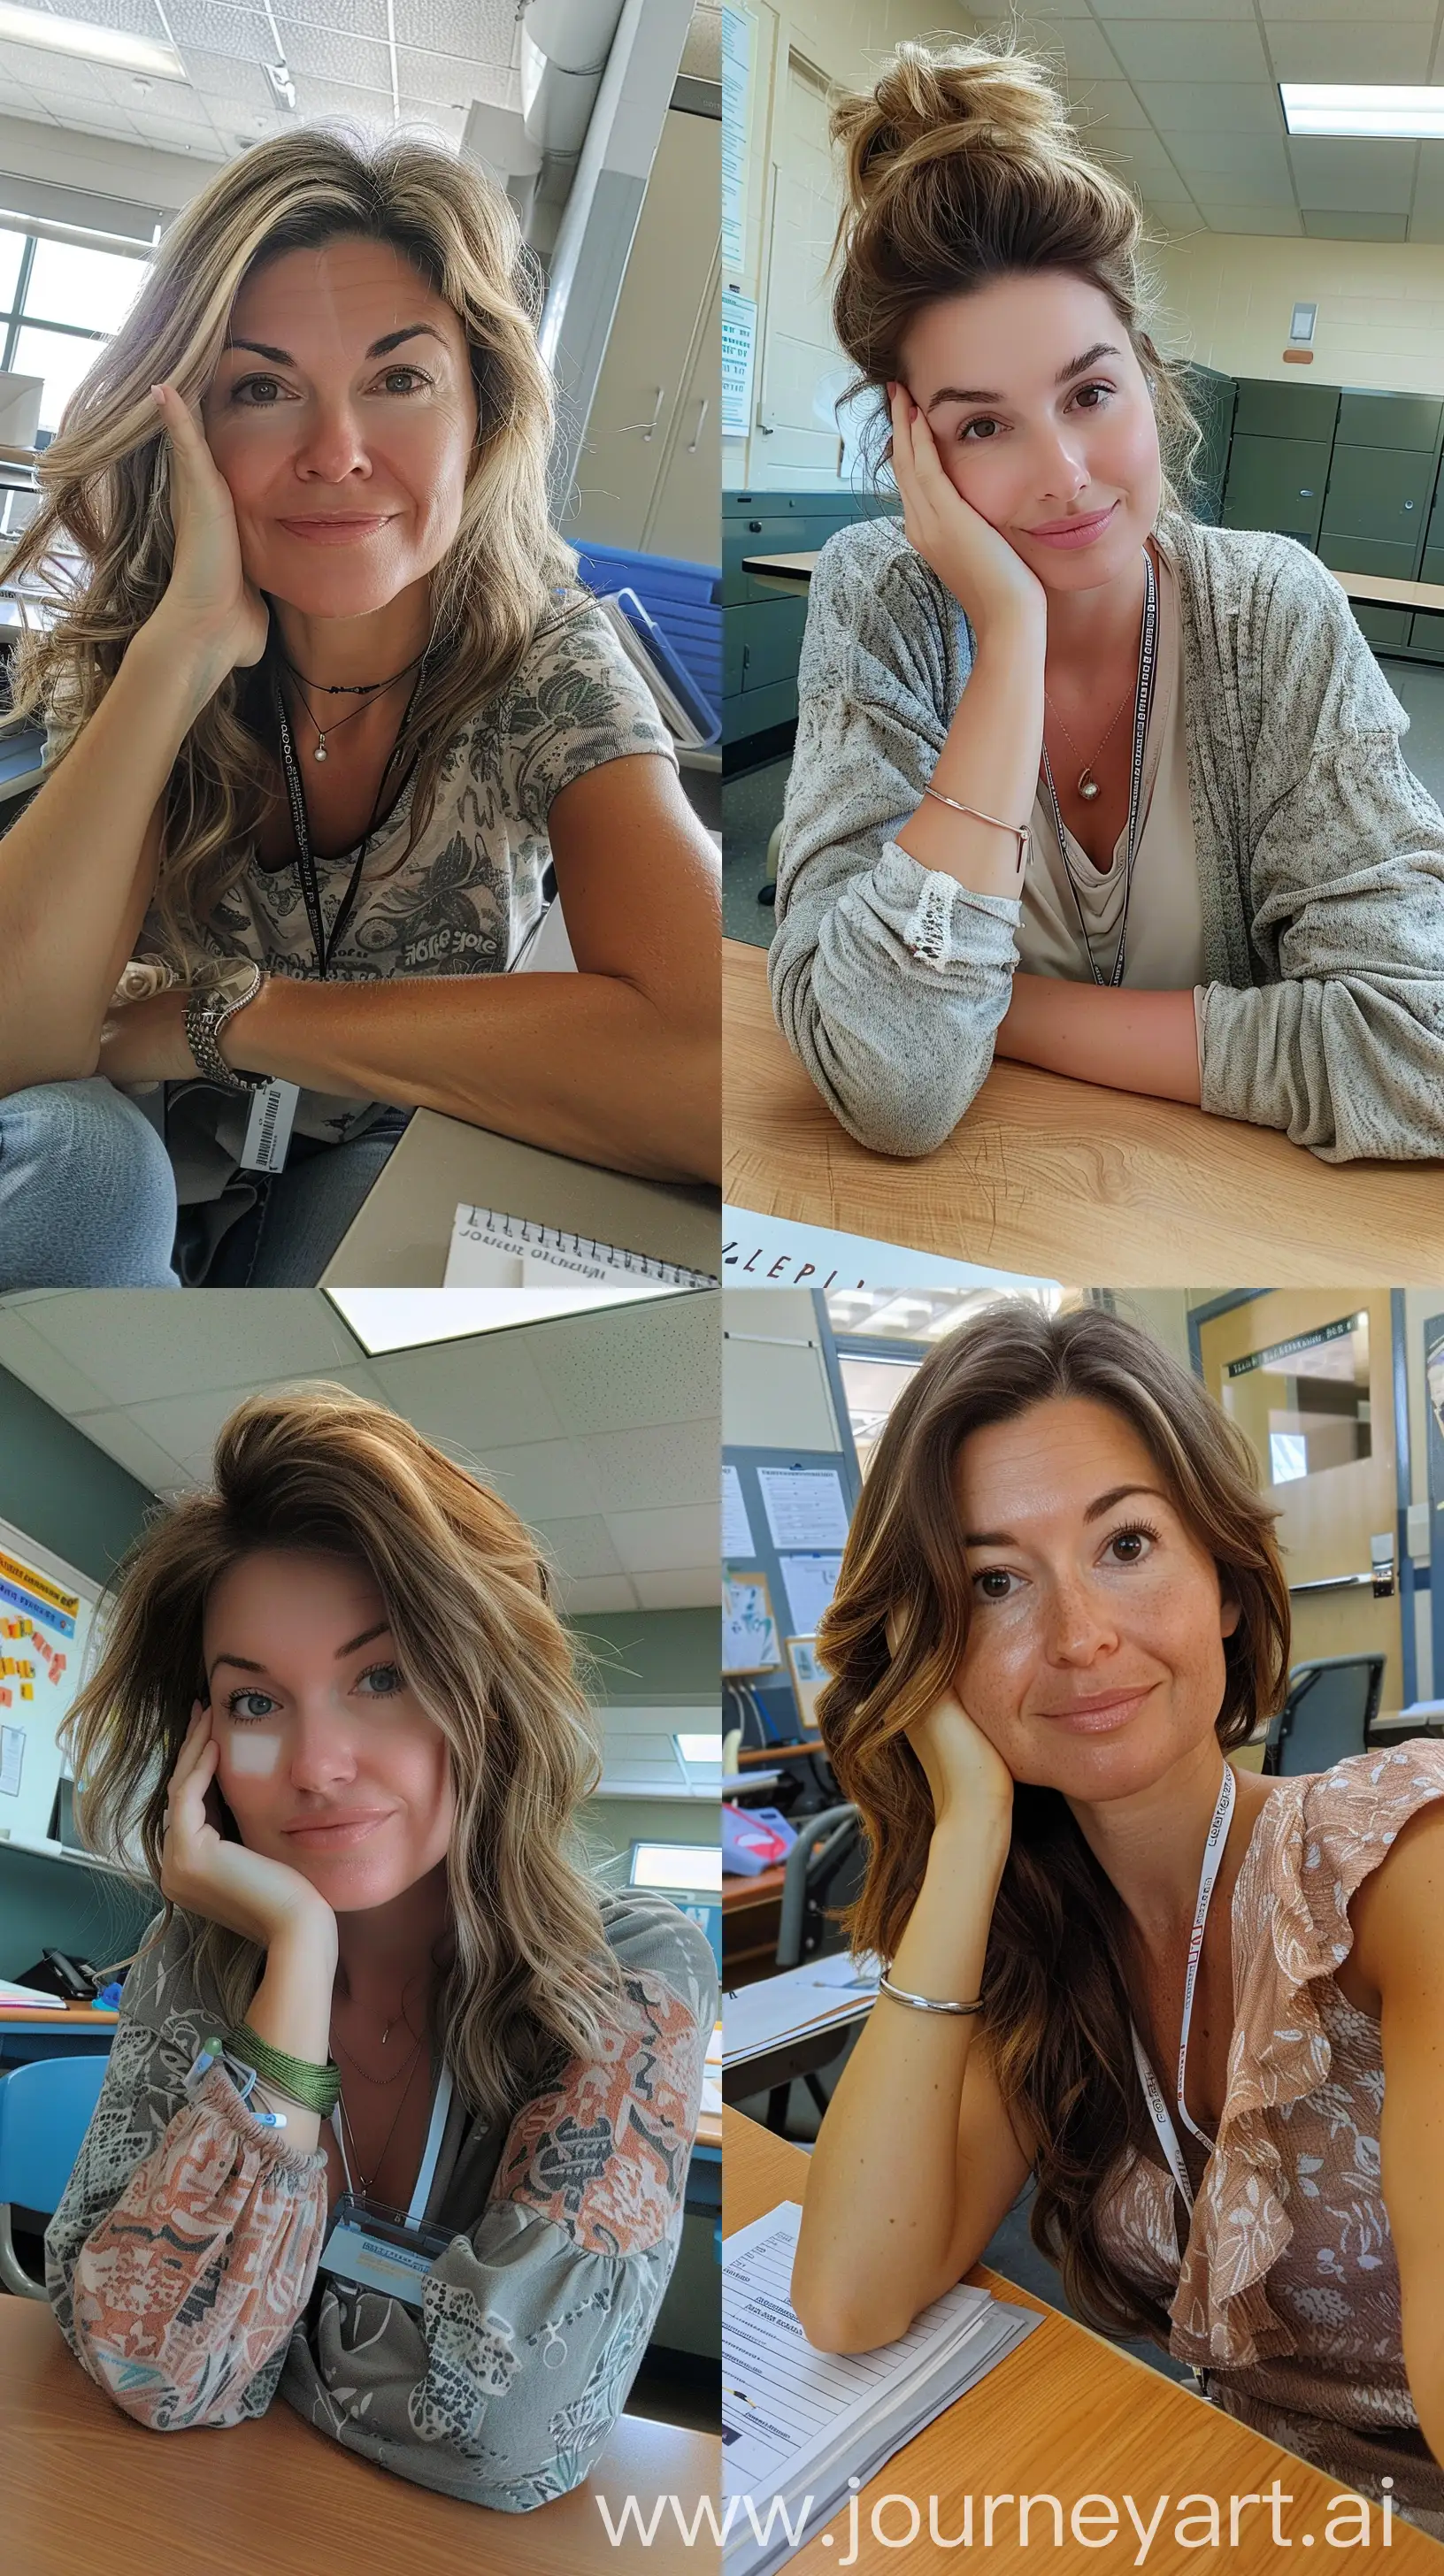 Elementary-School-Teacher-Taking-Selfie-at-Desk